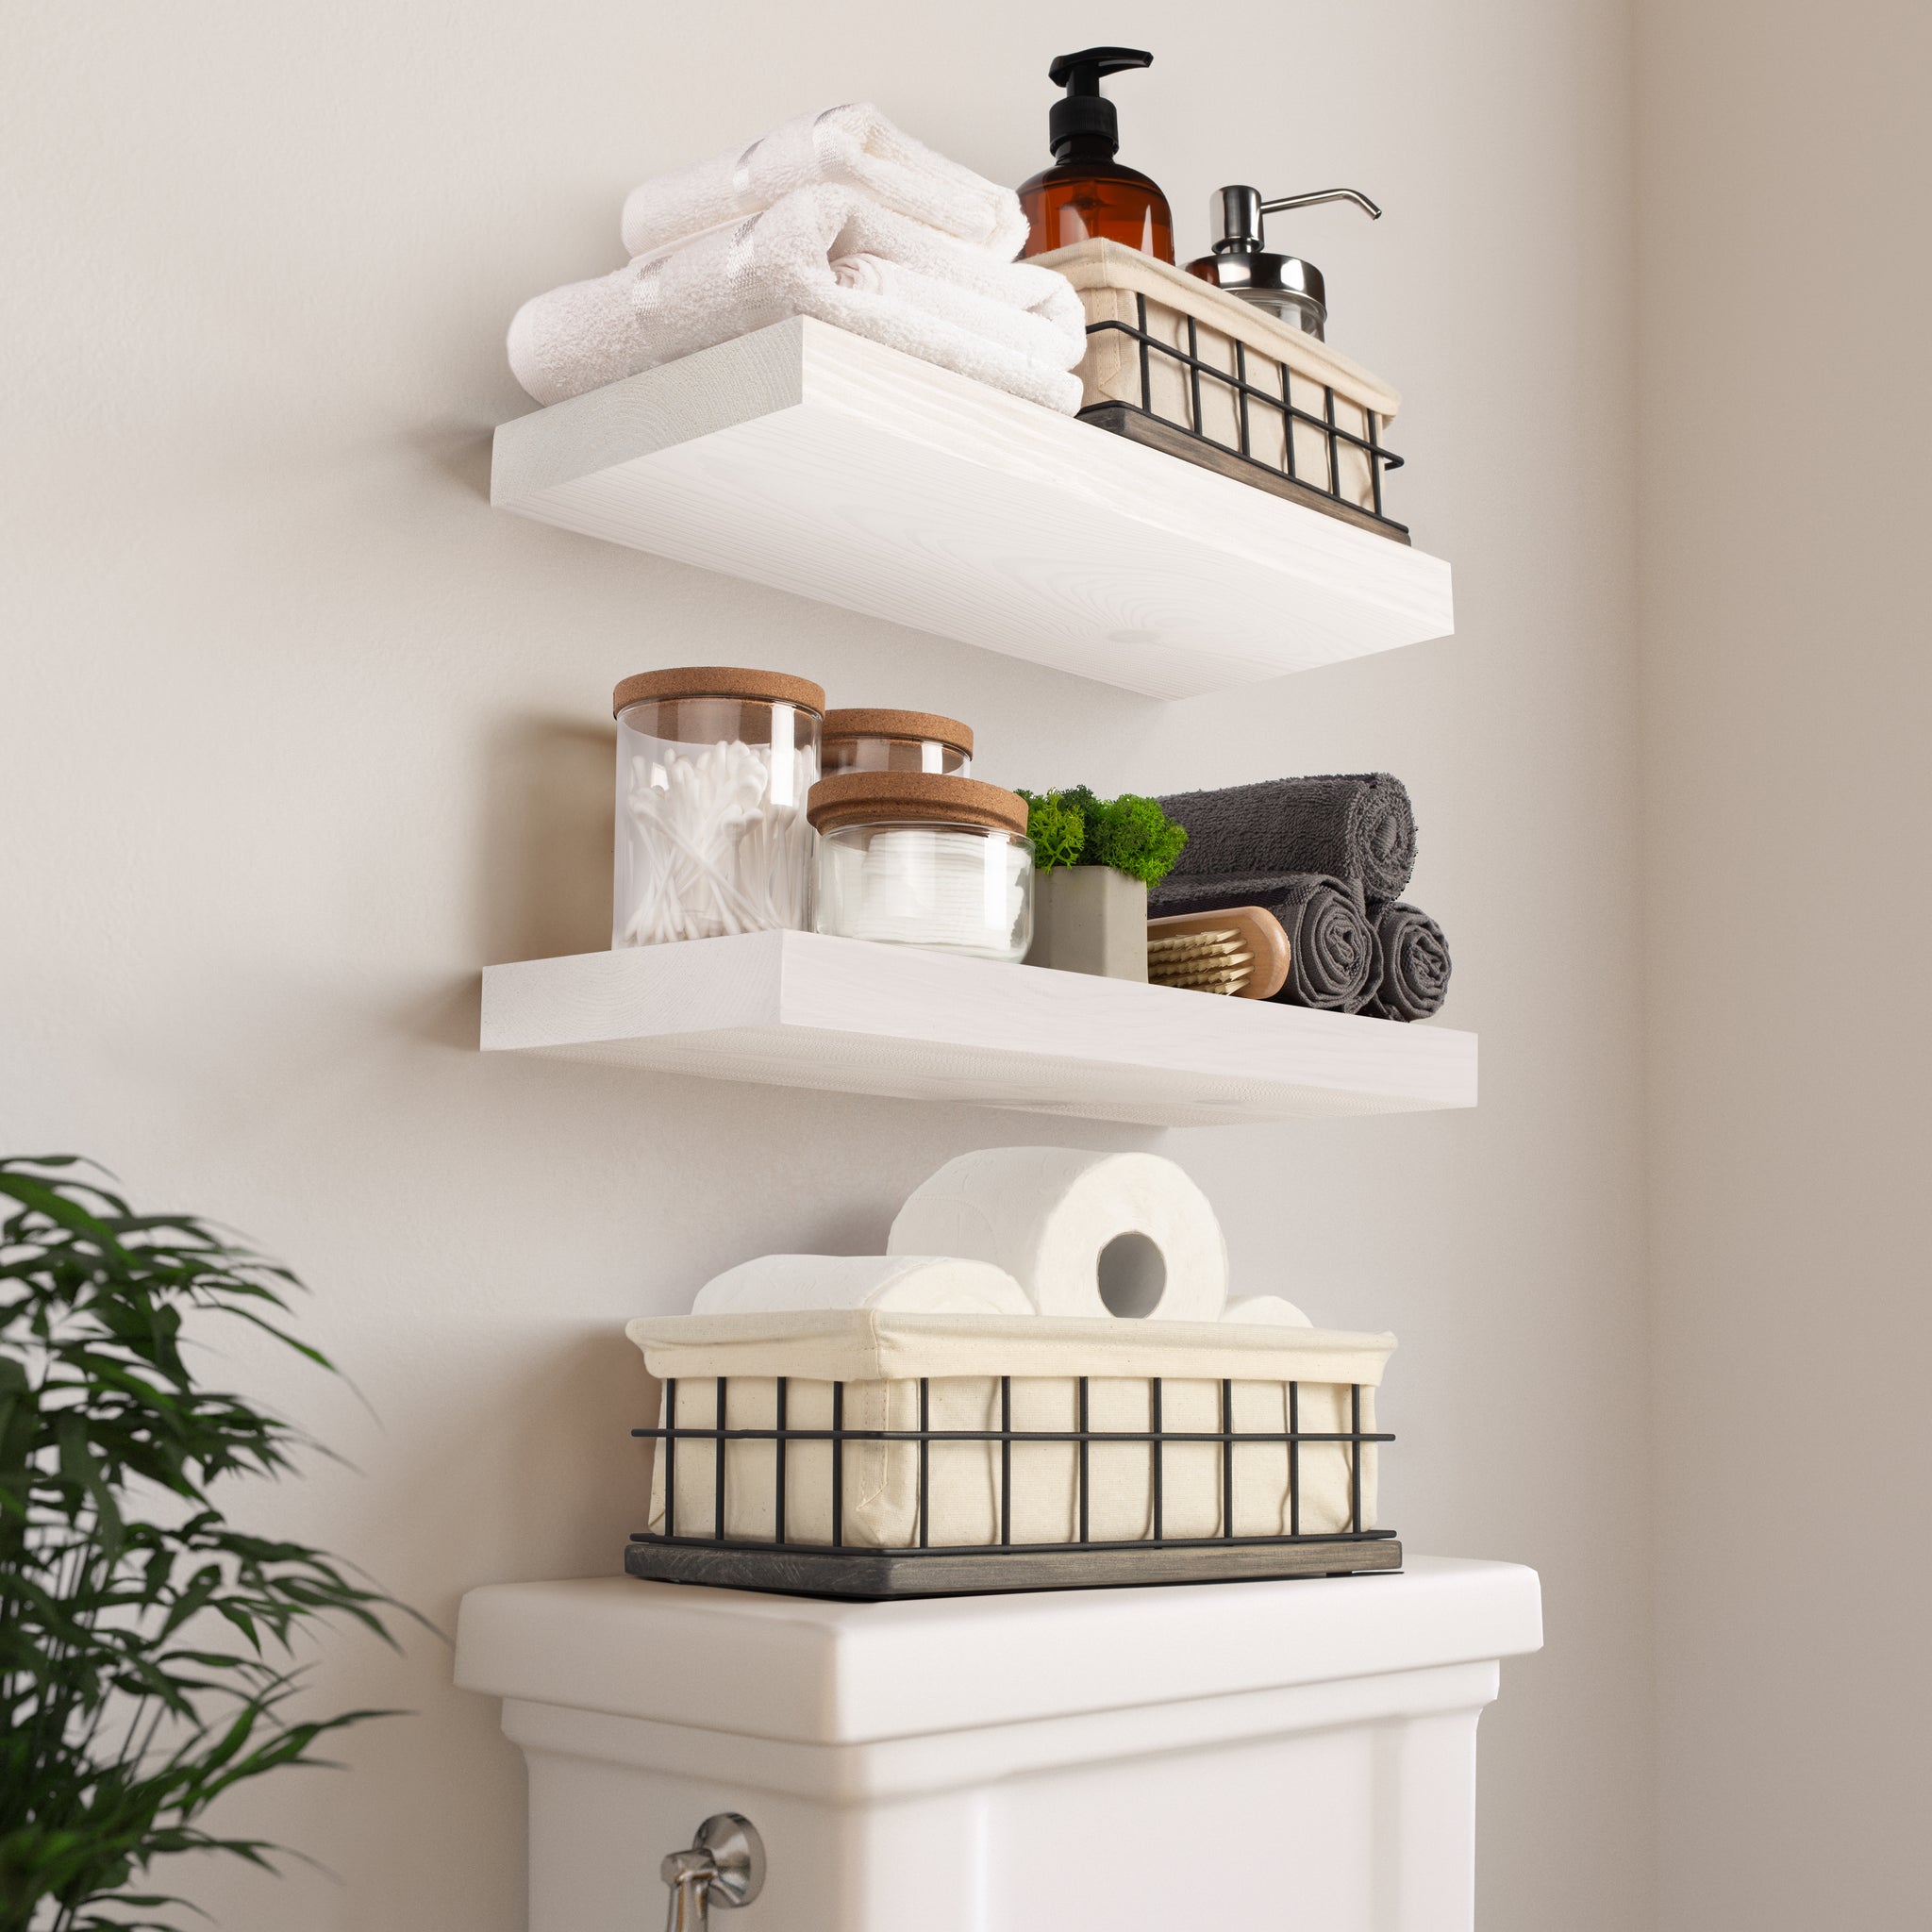 Floating Wood Shelves Set of 2 - White Color - 16" x 6.7"